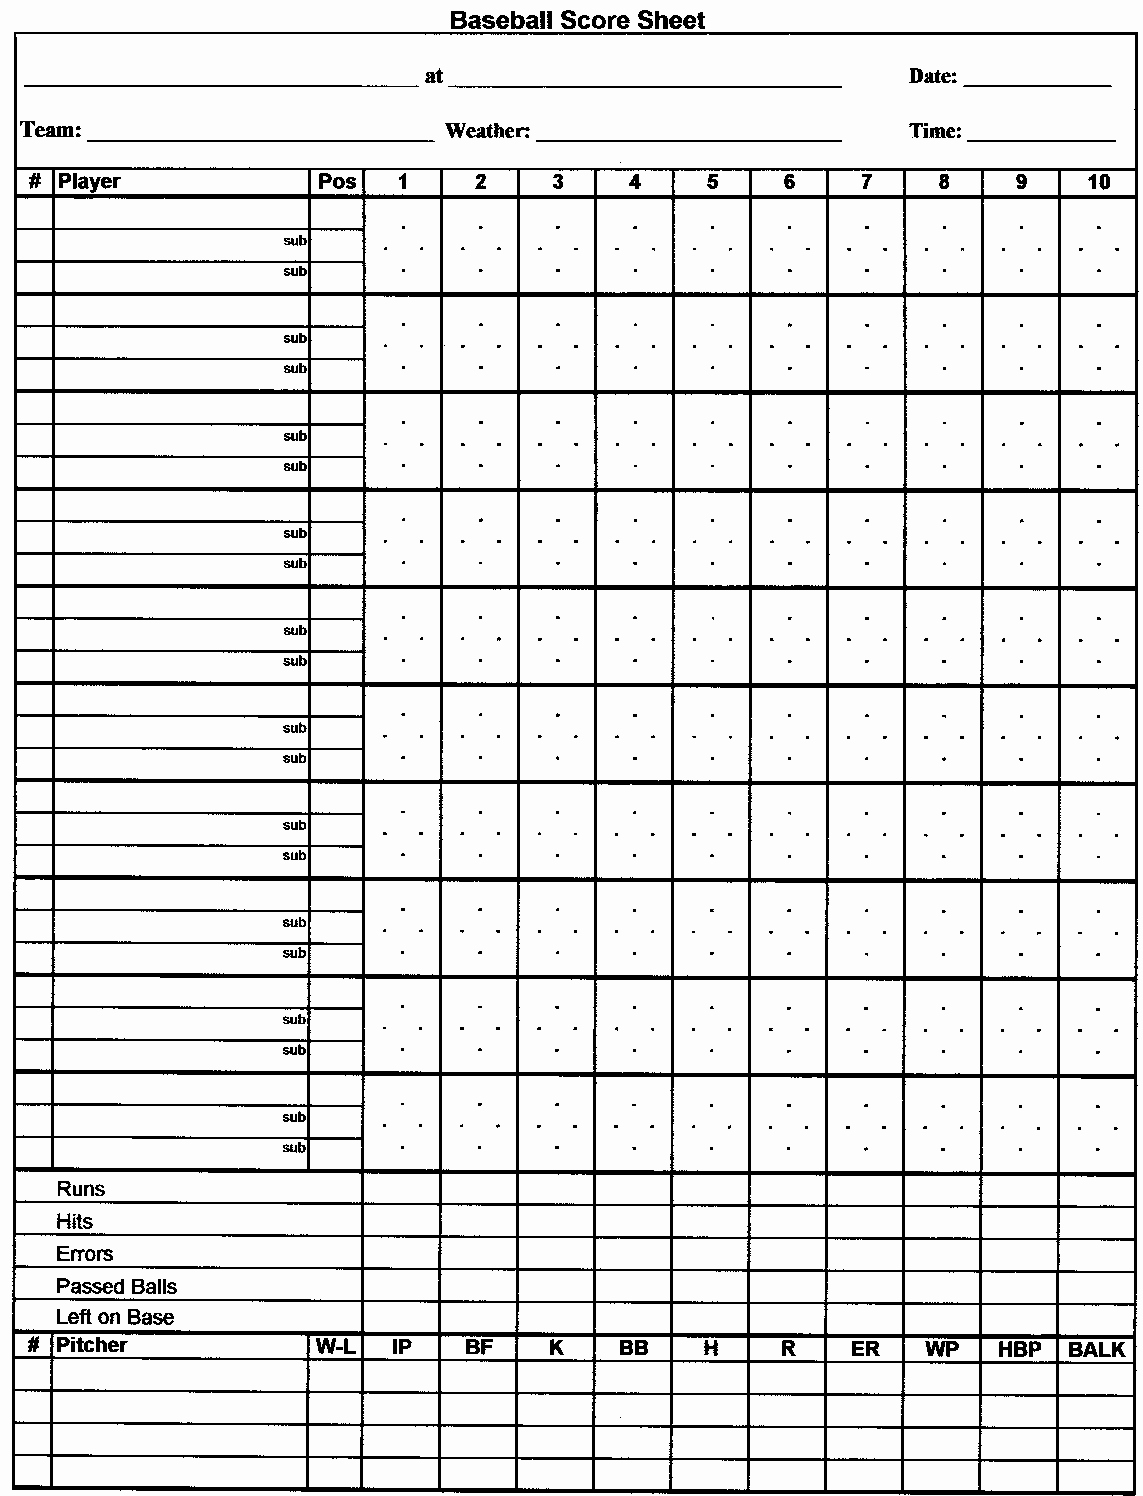 Baseball Score Book Template Fresh Baseball Score Sheet